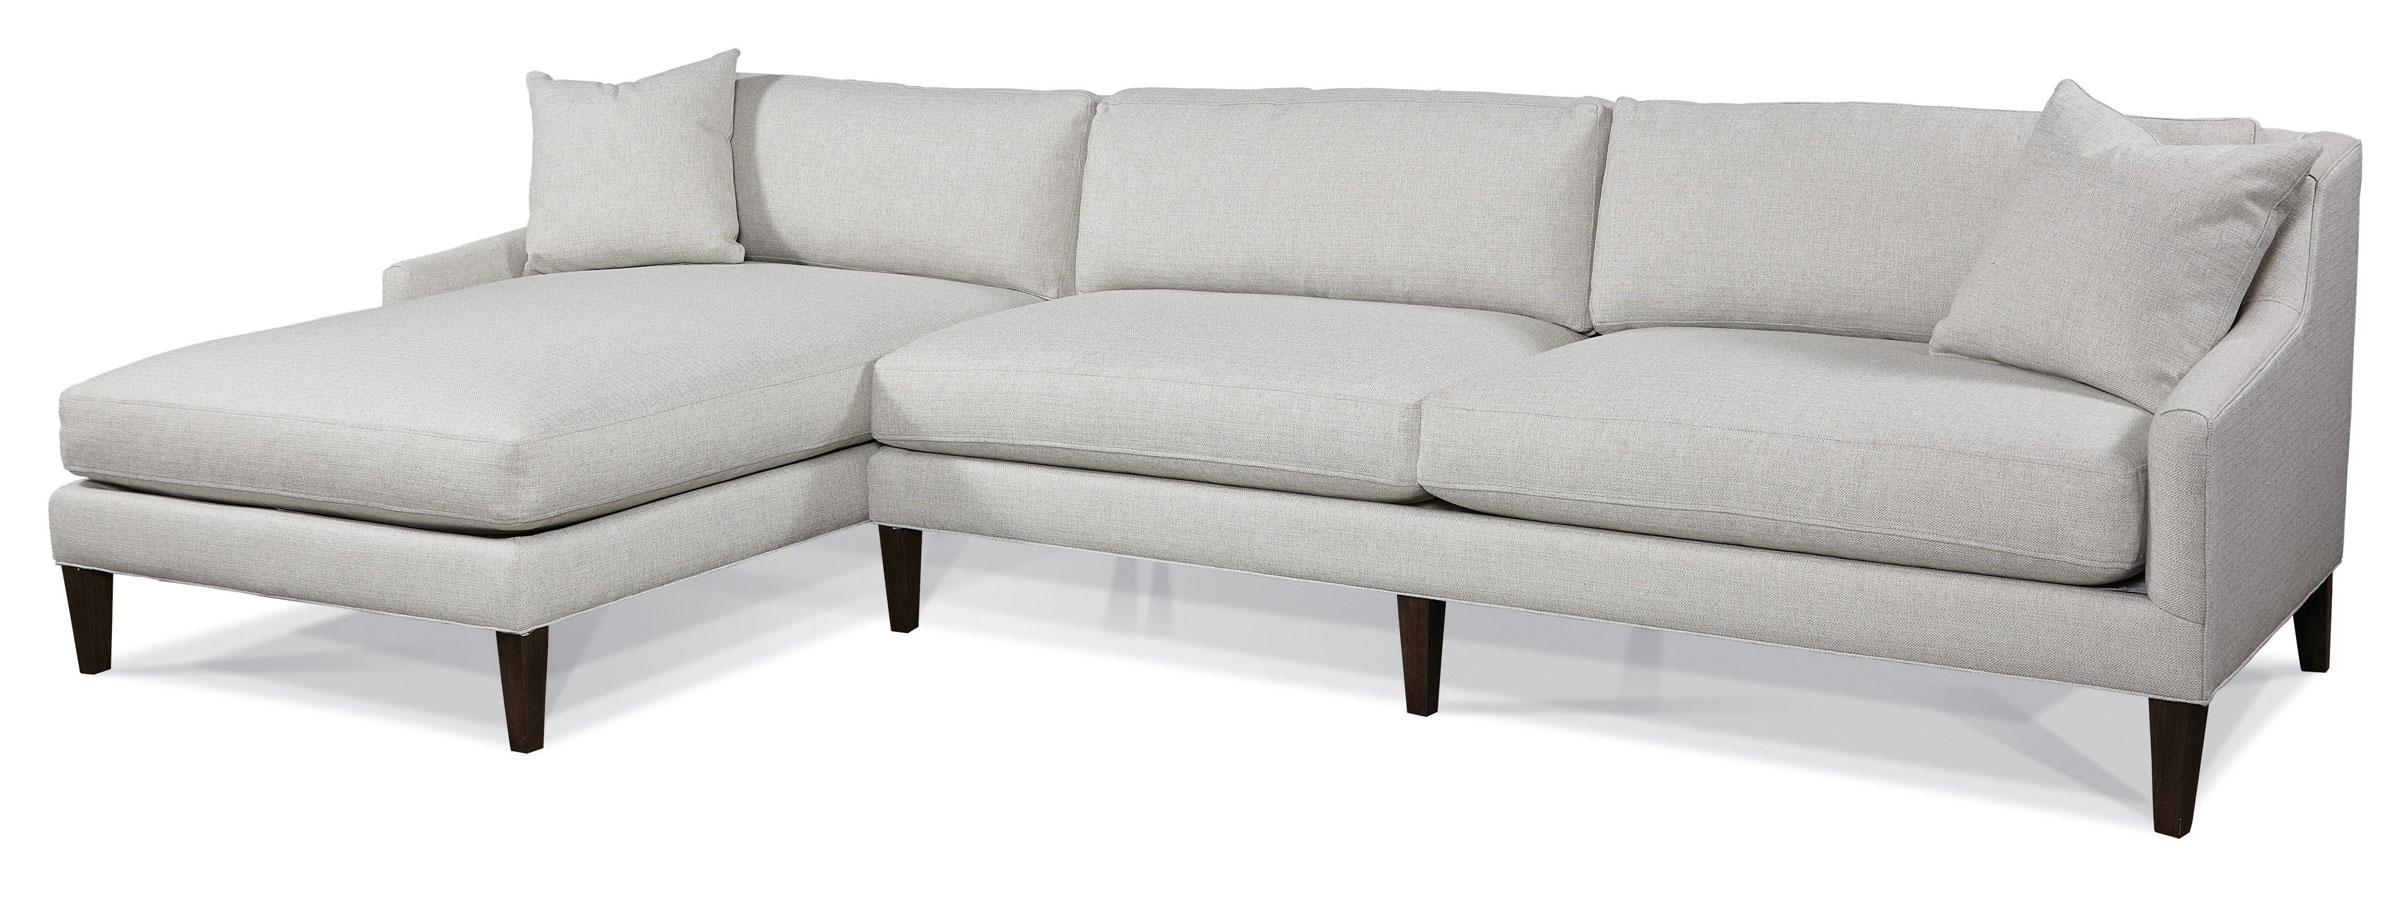 American upholstery, designer furniture